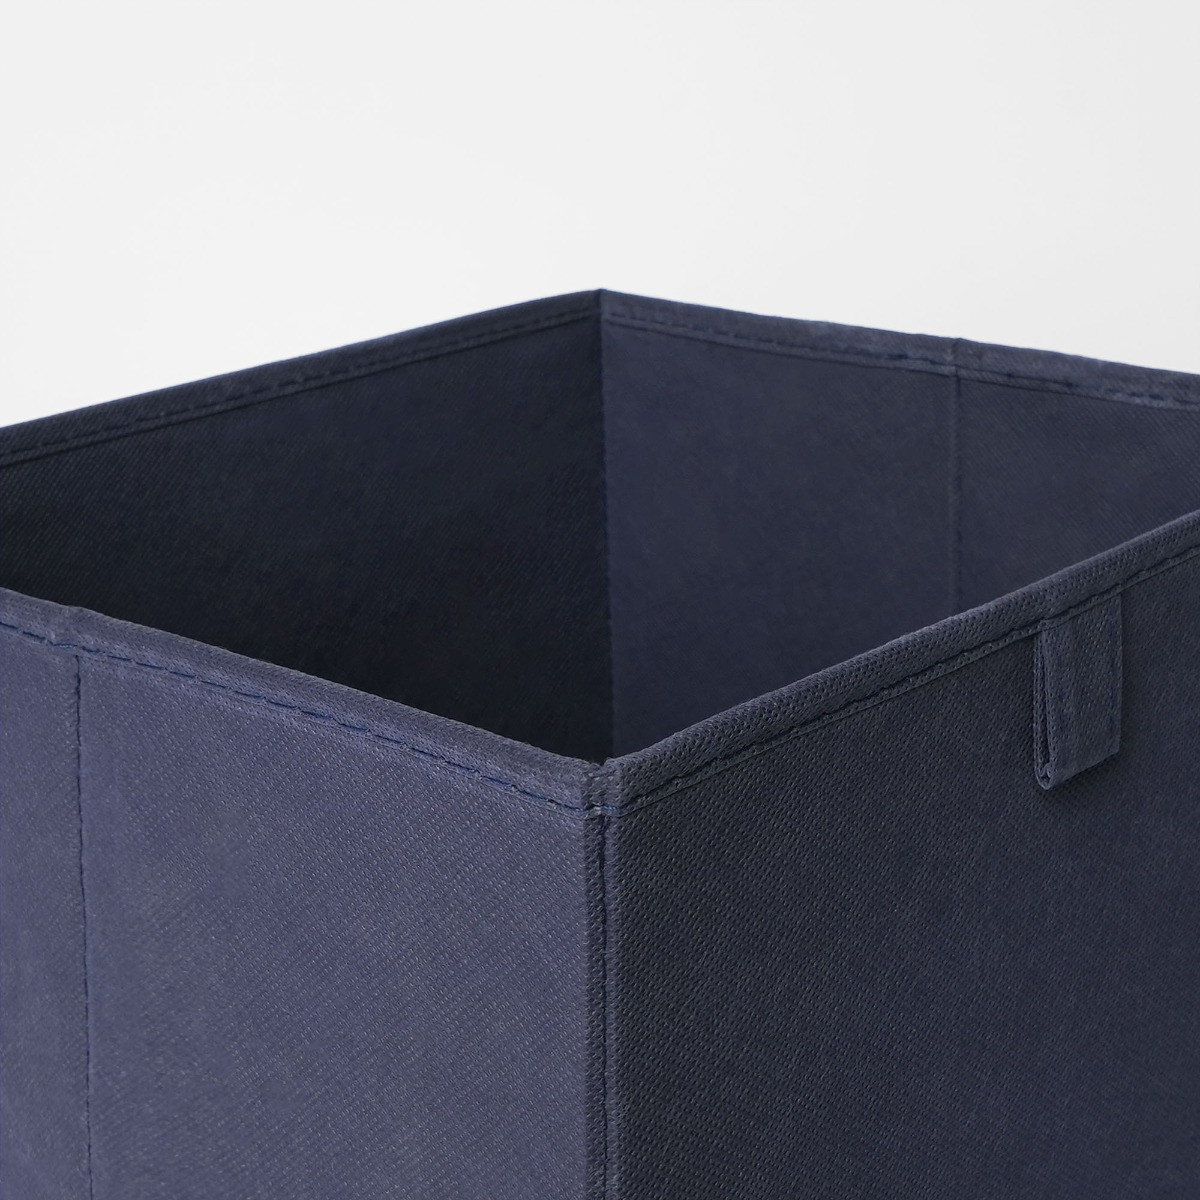 OHS Plain Cube Storage Boxes, Navy Blue - 2 Pack>